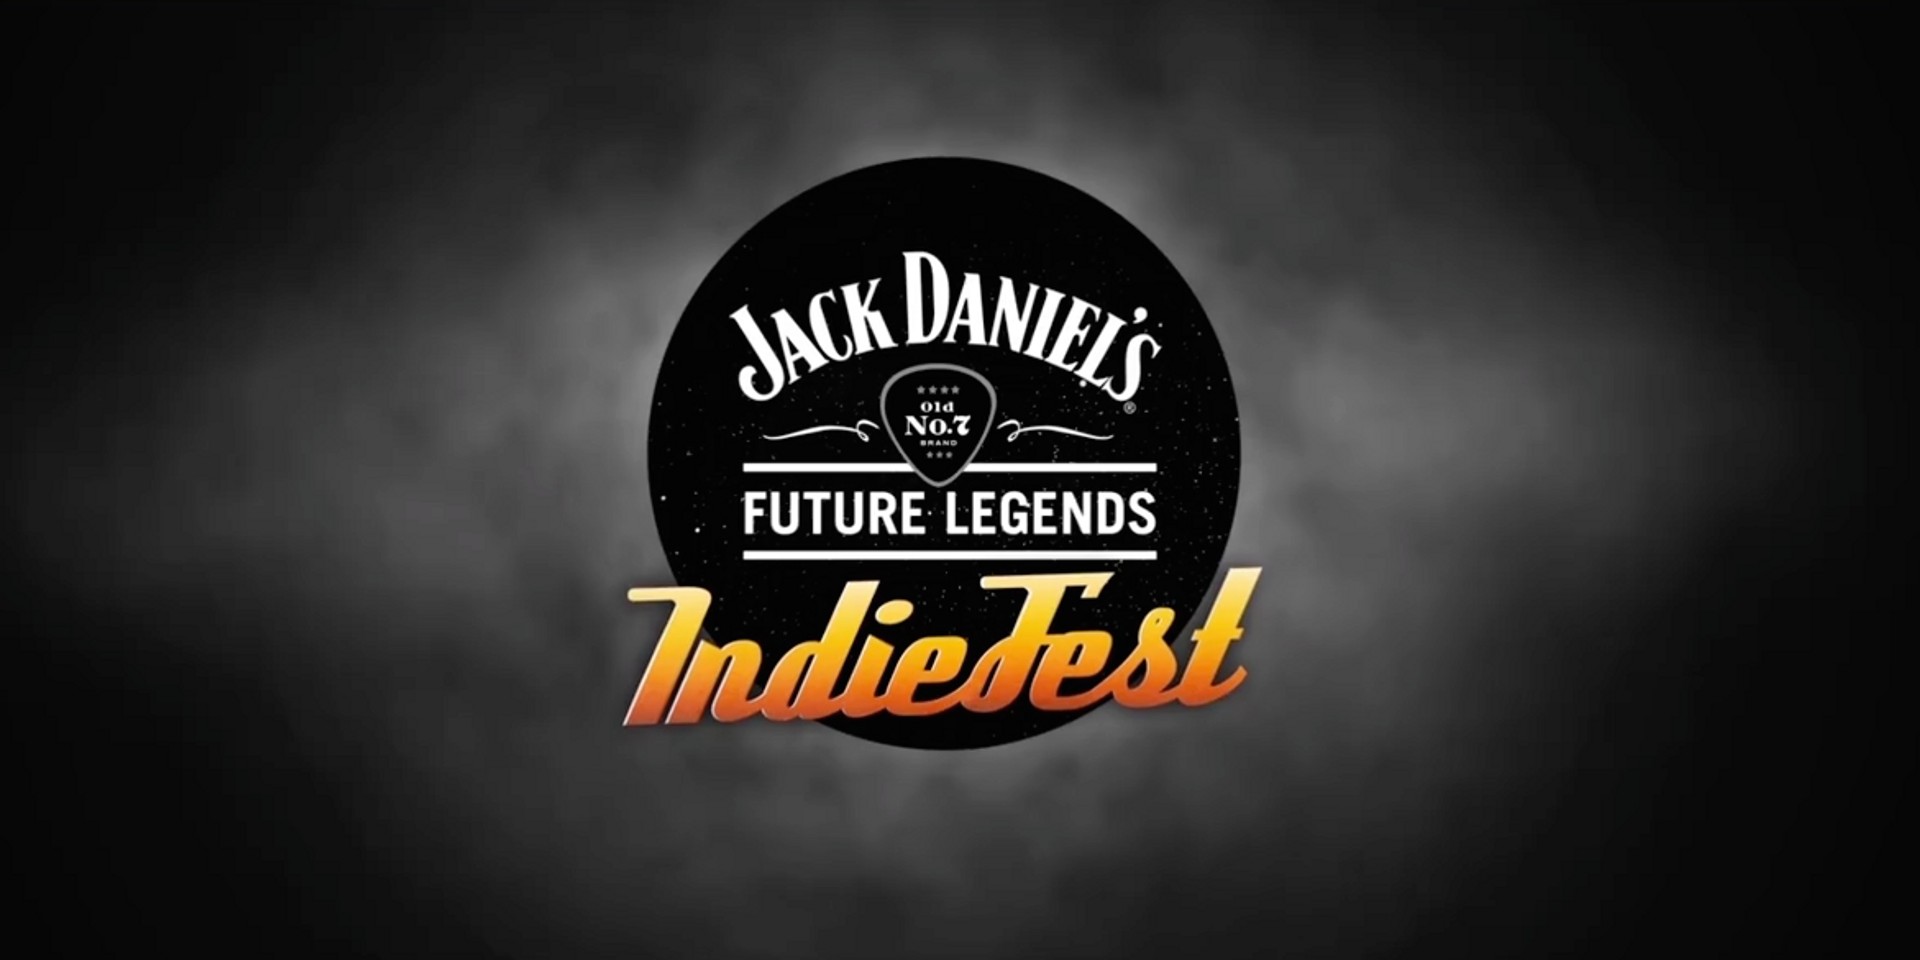 Win tickets to Jack Daniel's Future Legends IndieFest 2016